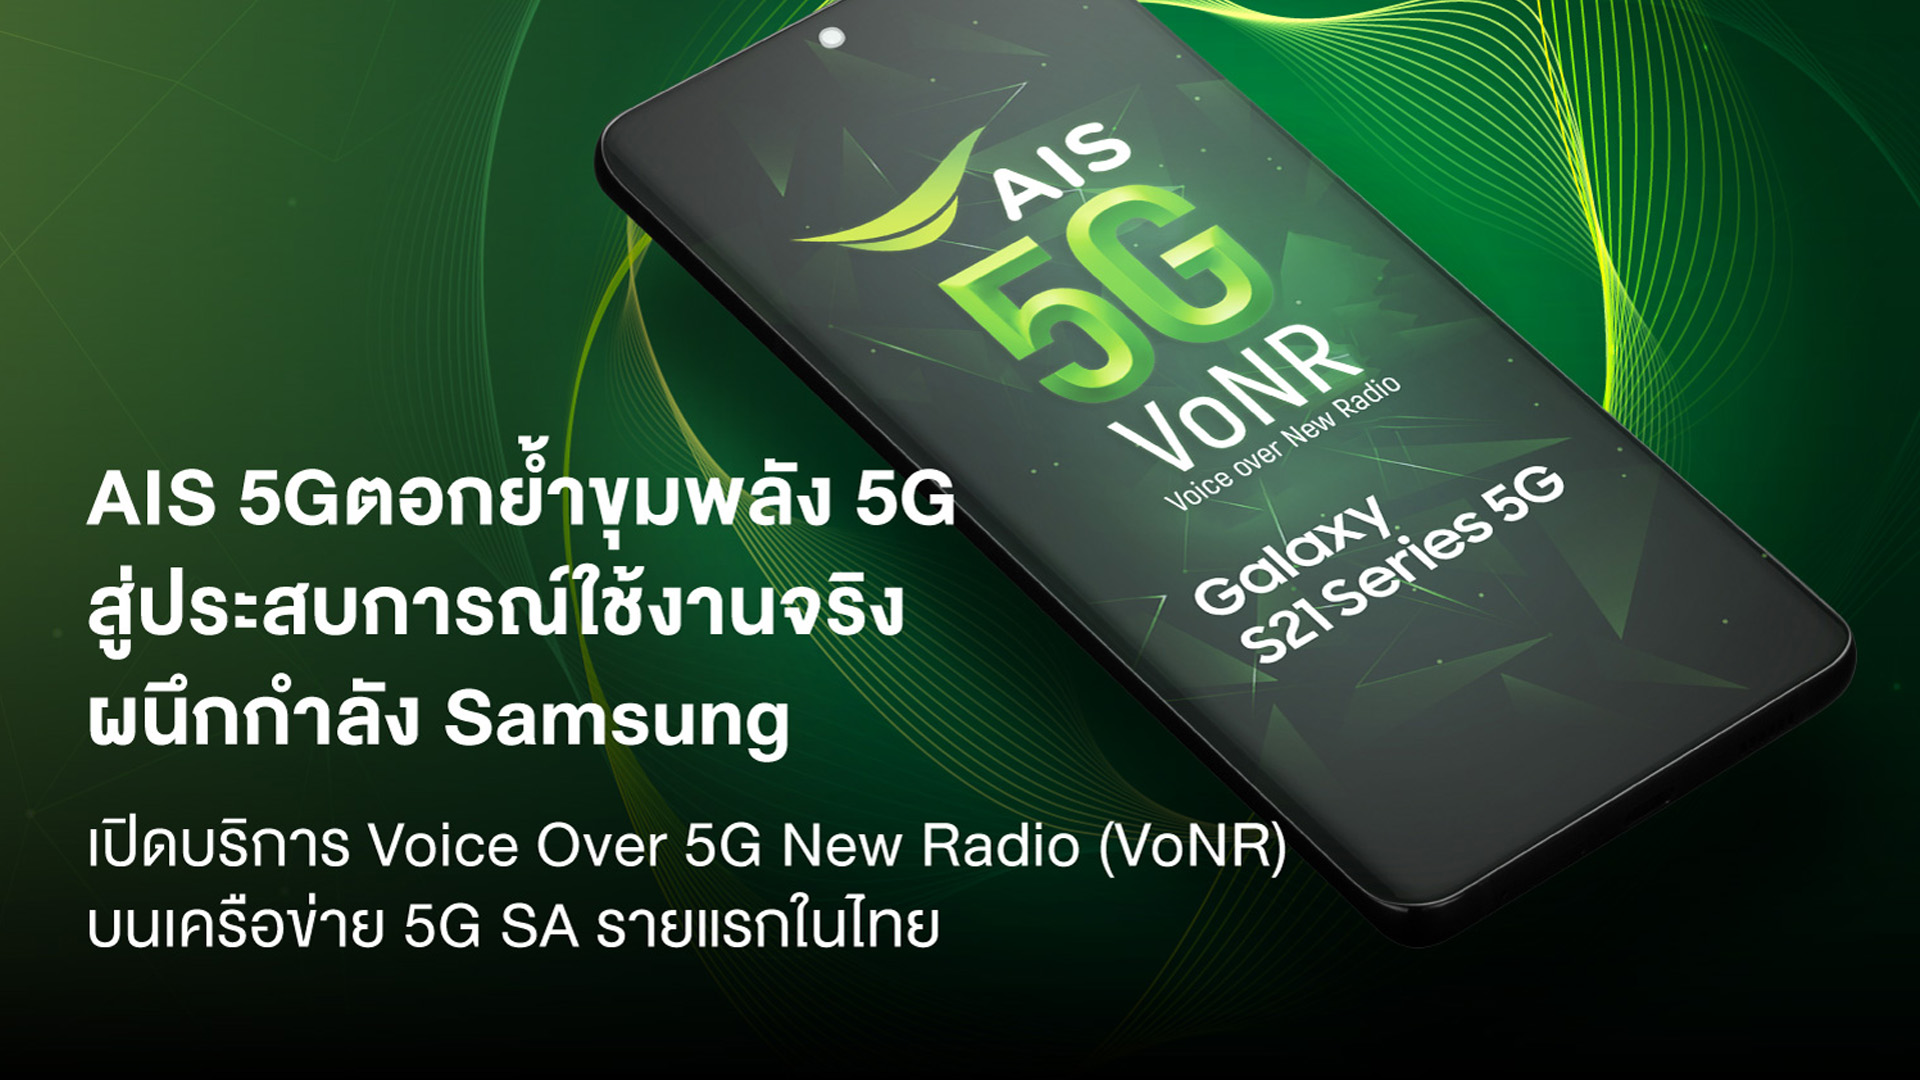 AIS 5G ผนึกกำลัง Samsung เปิดบริการ Voice over 5G New Radio (VoNR)